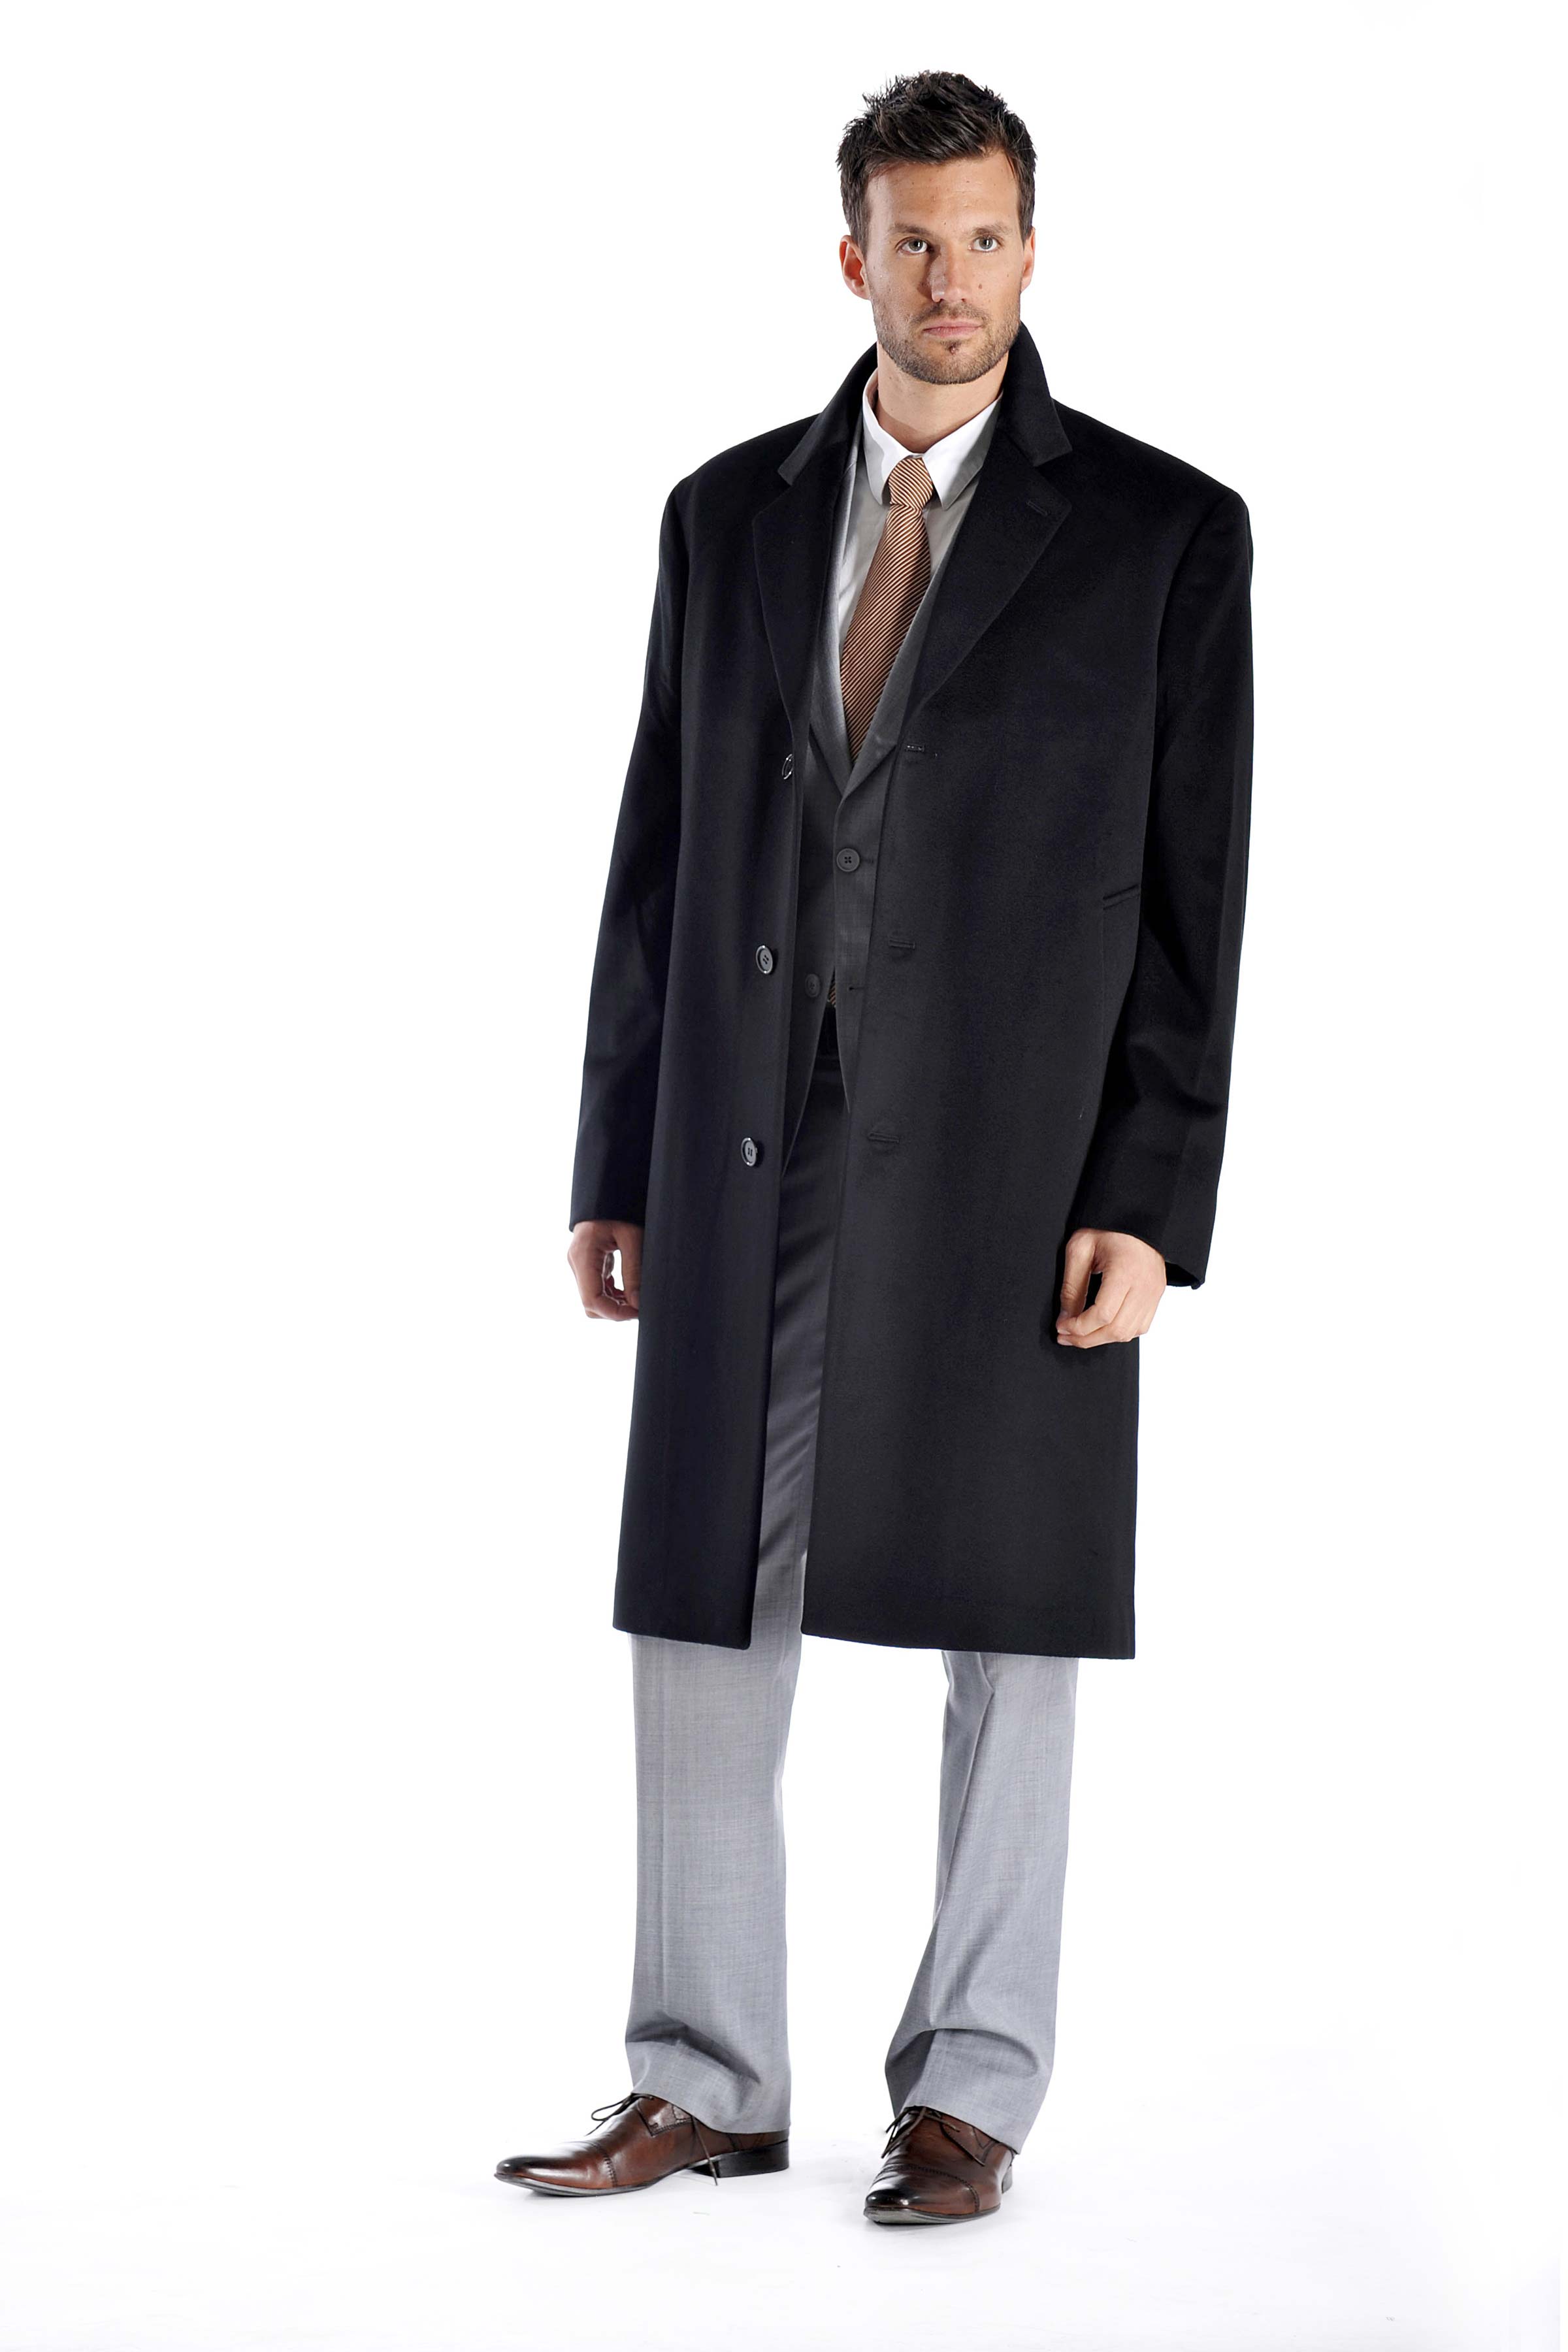 Pure Cashmere Knee Length Coat for Men (Black, 42)